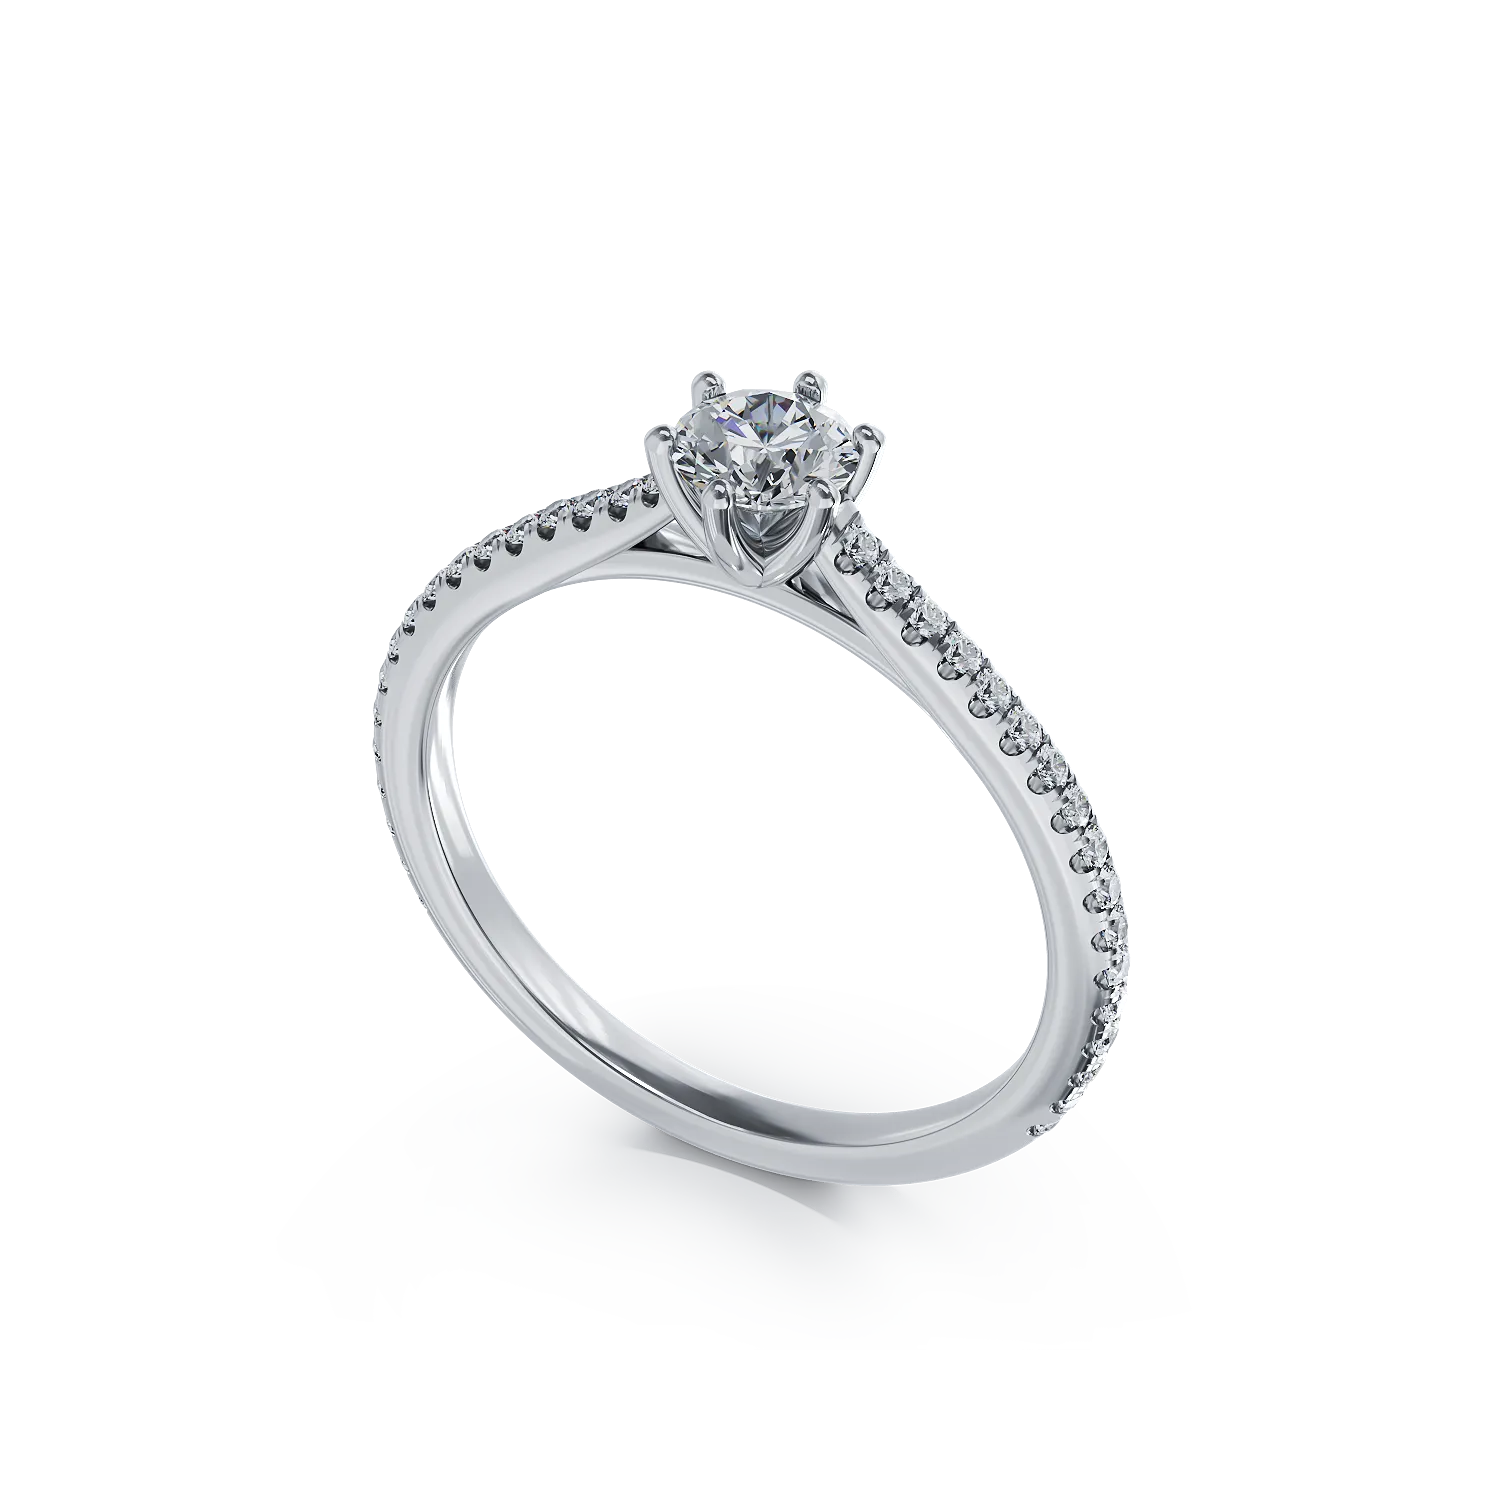 Platinum engagement ring with 0.31ct diamond and 0.17ct diamonds